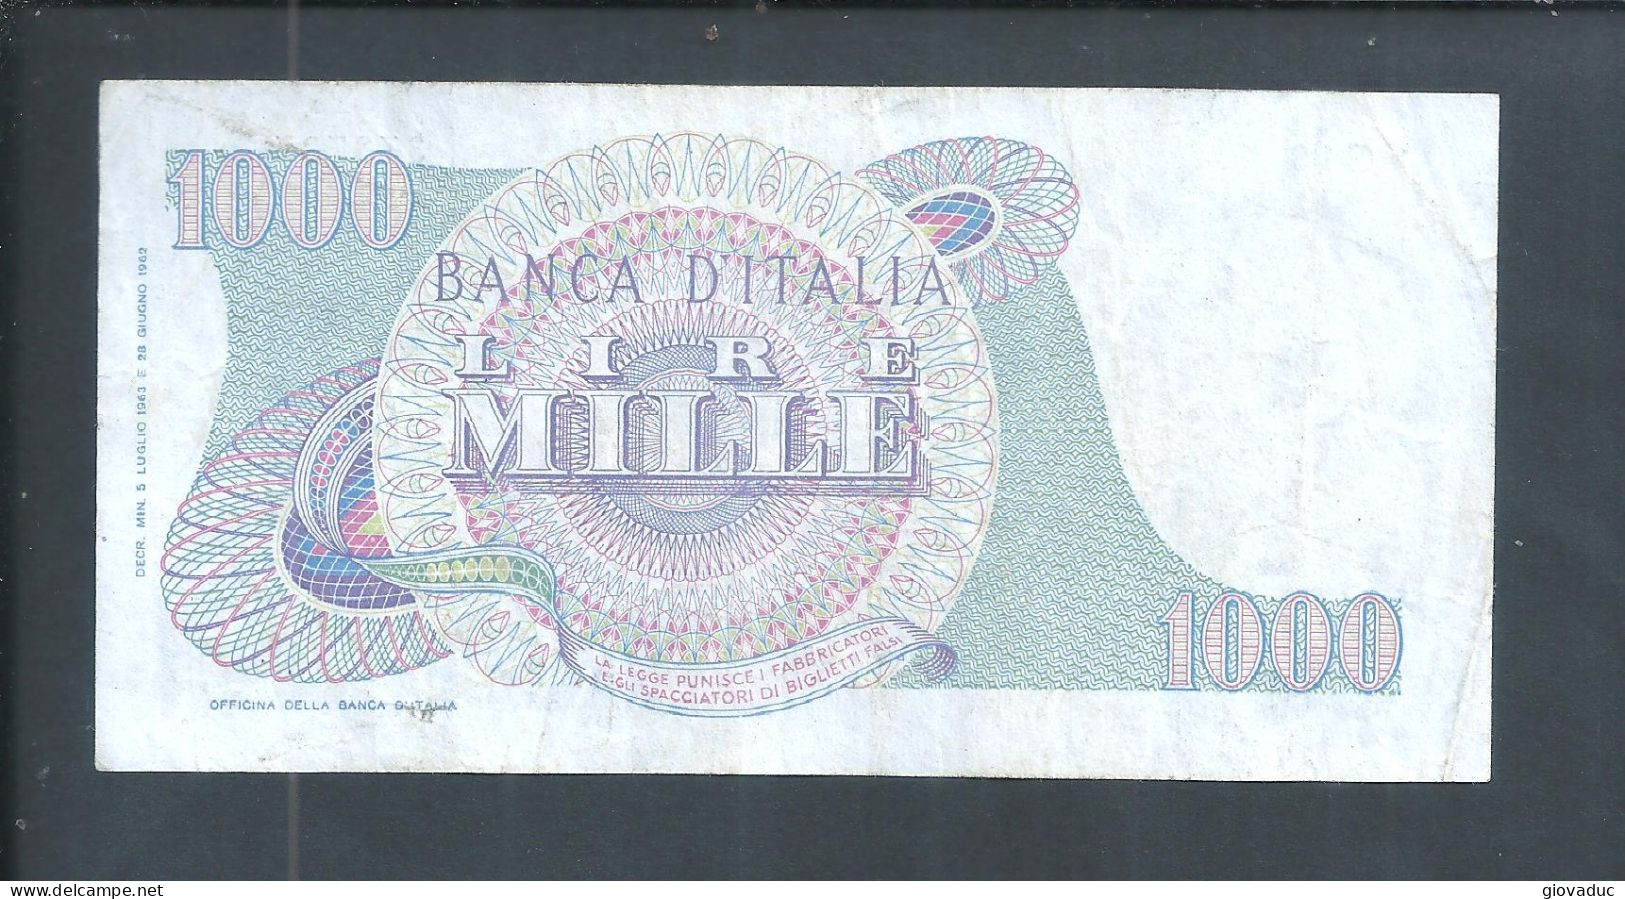 Banconota Italia 1000 Lire 28 Giugno 1962 - Rarita Unica N° C18 - 373737 - Filigrana - Vedi Foto Firme Carli-Ripa - - [ 7] Errors & Varieties